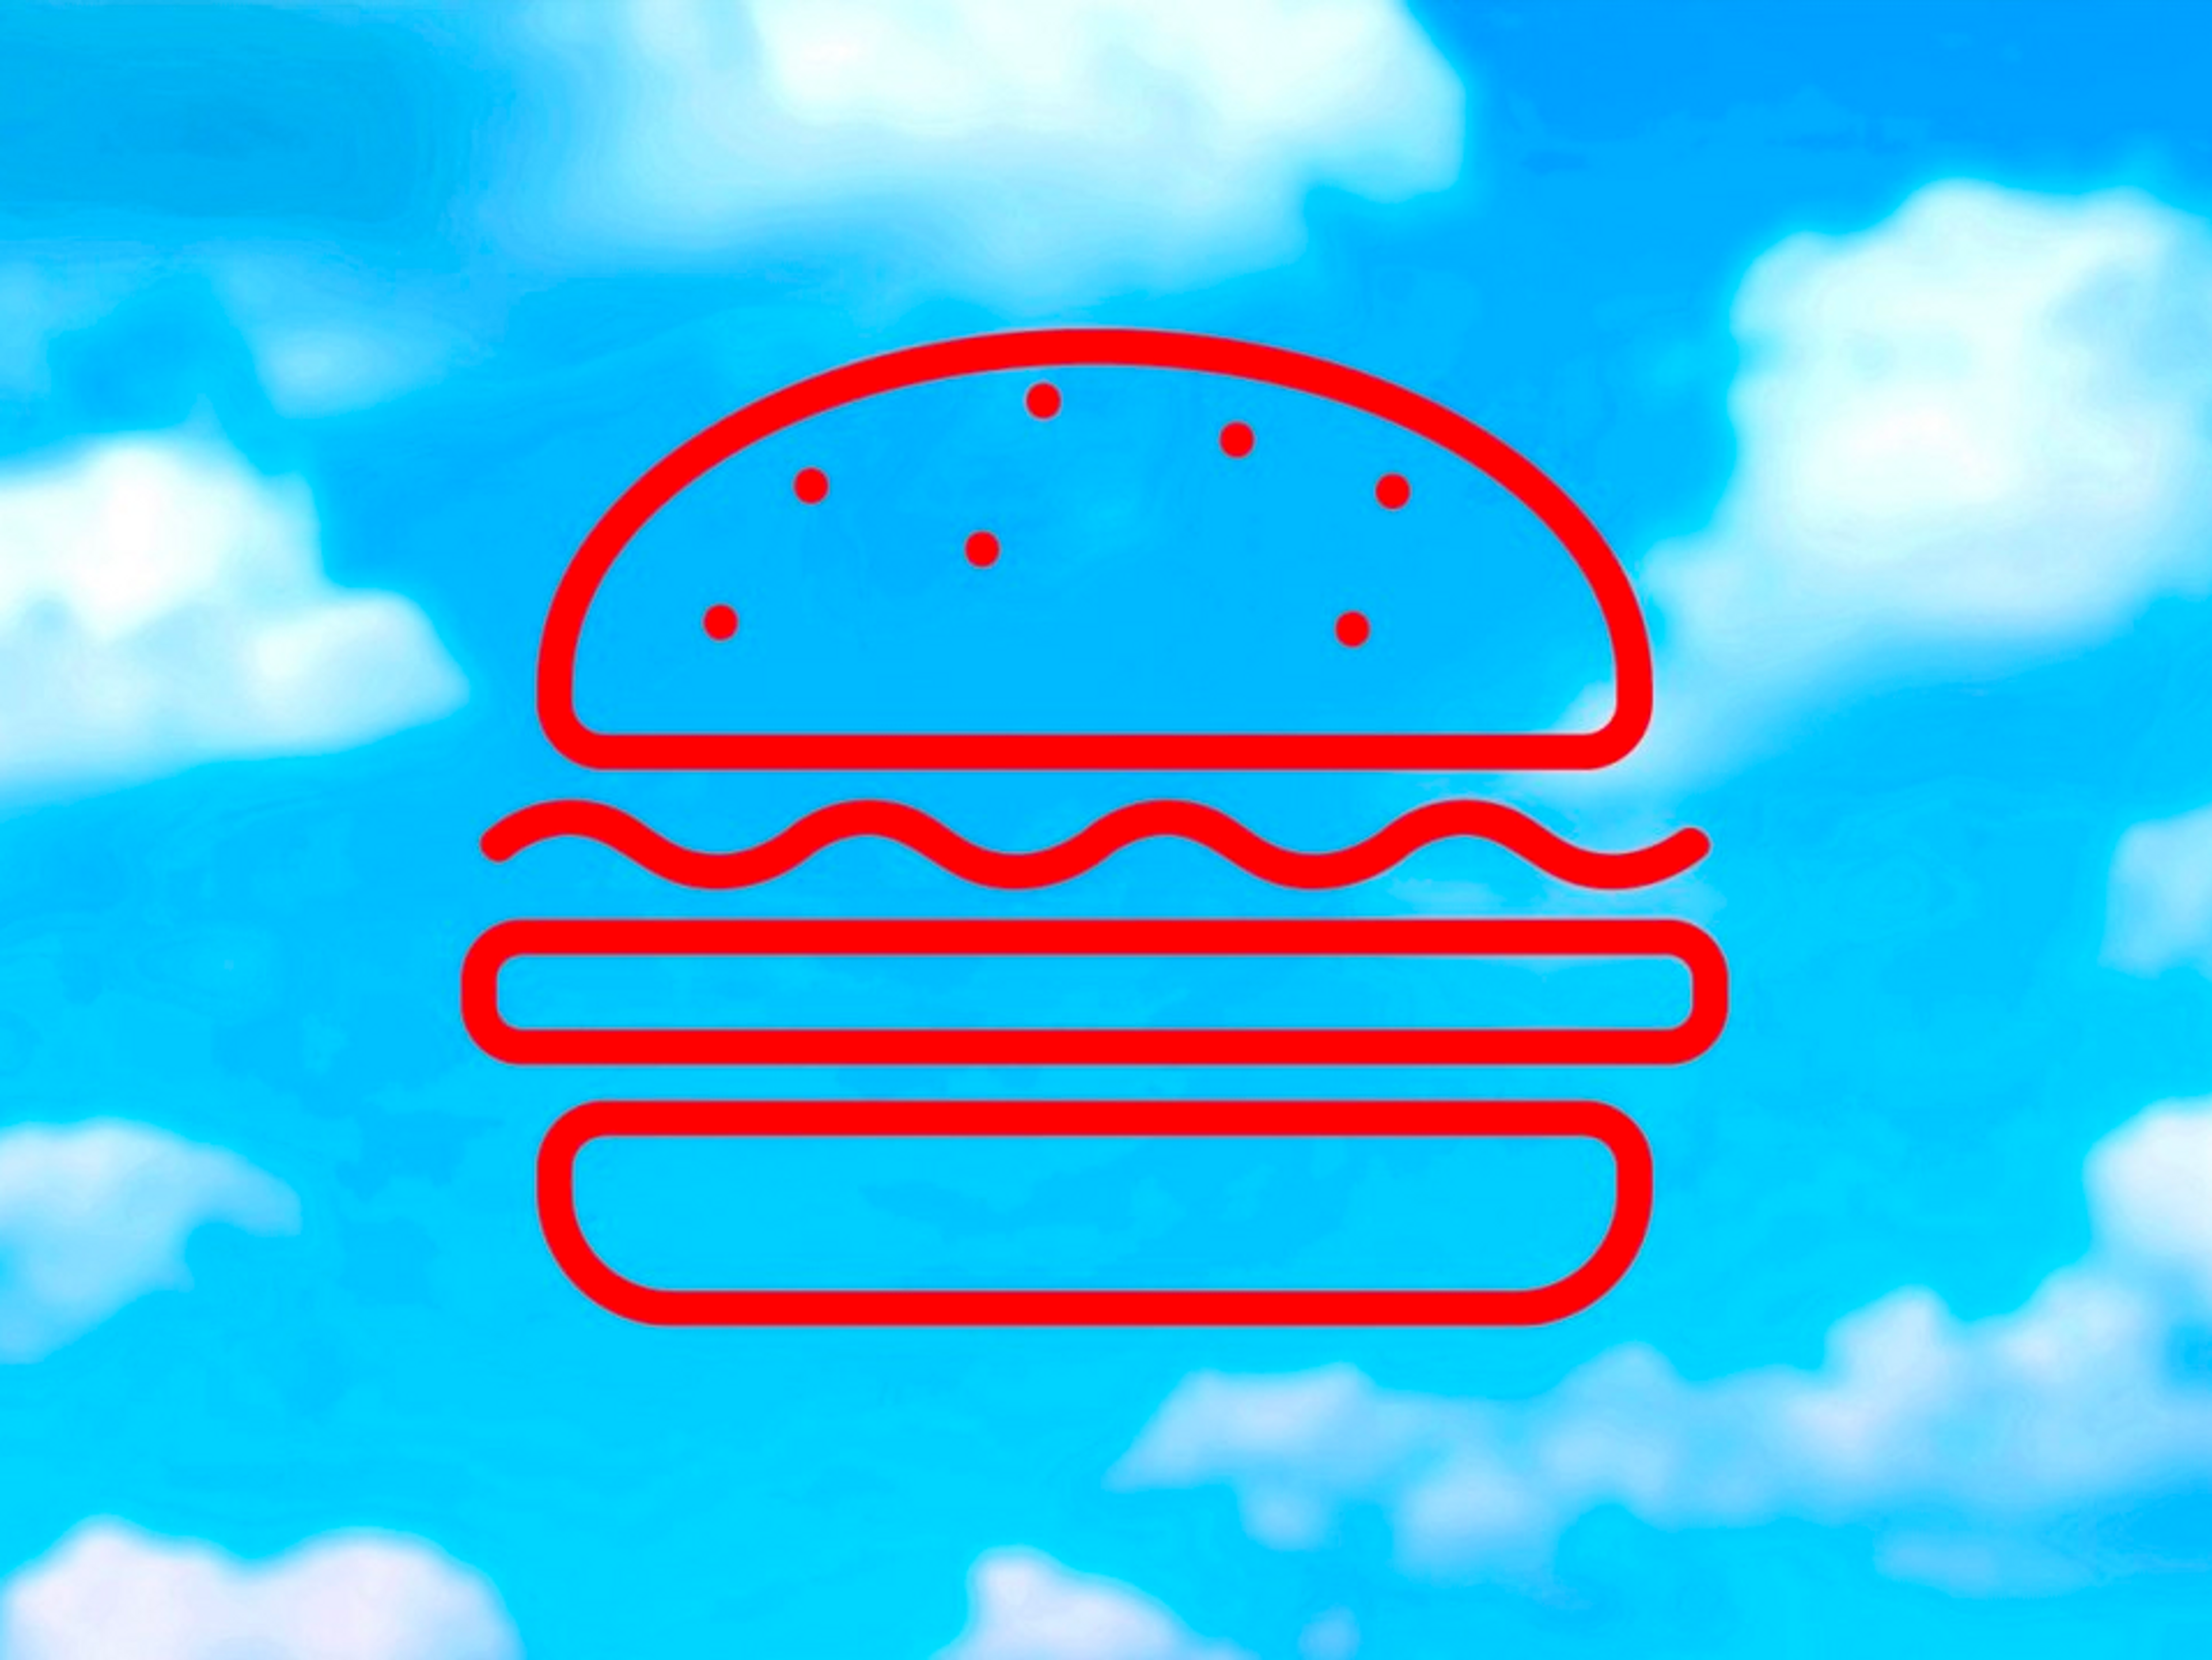 SCiFi Burger Image